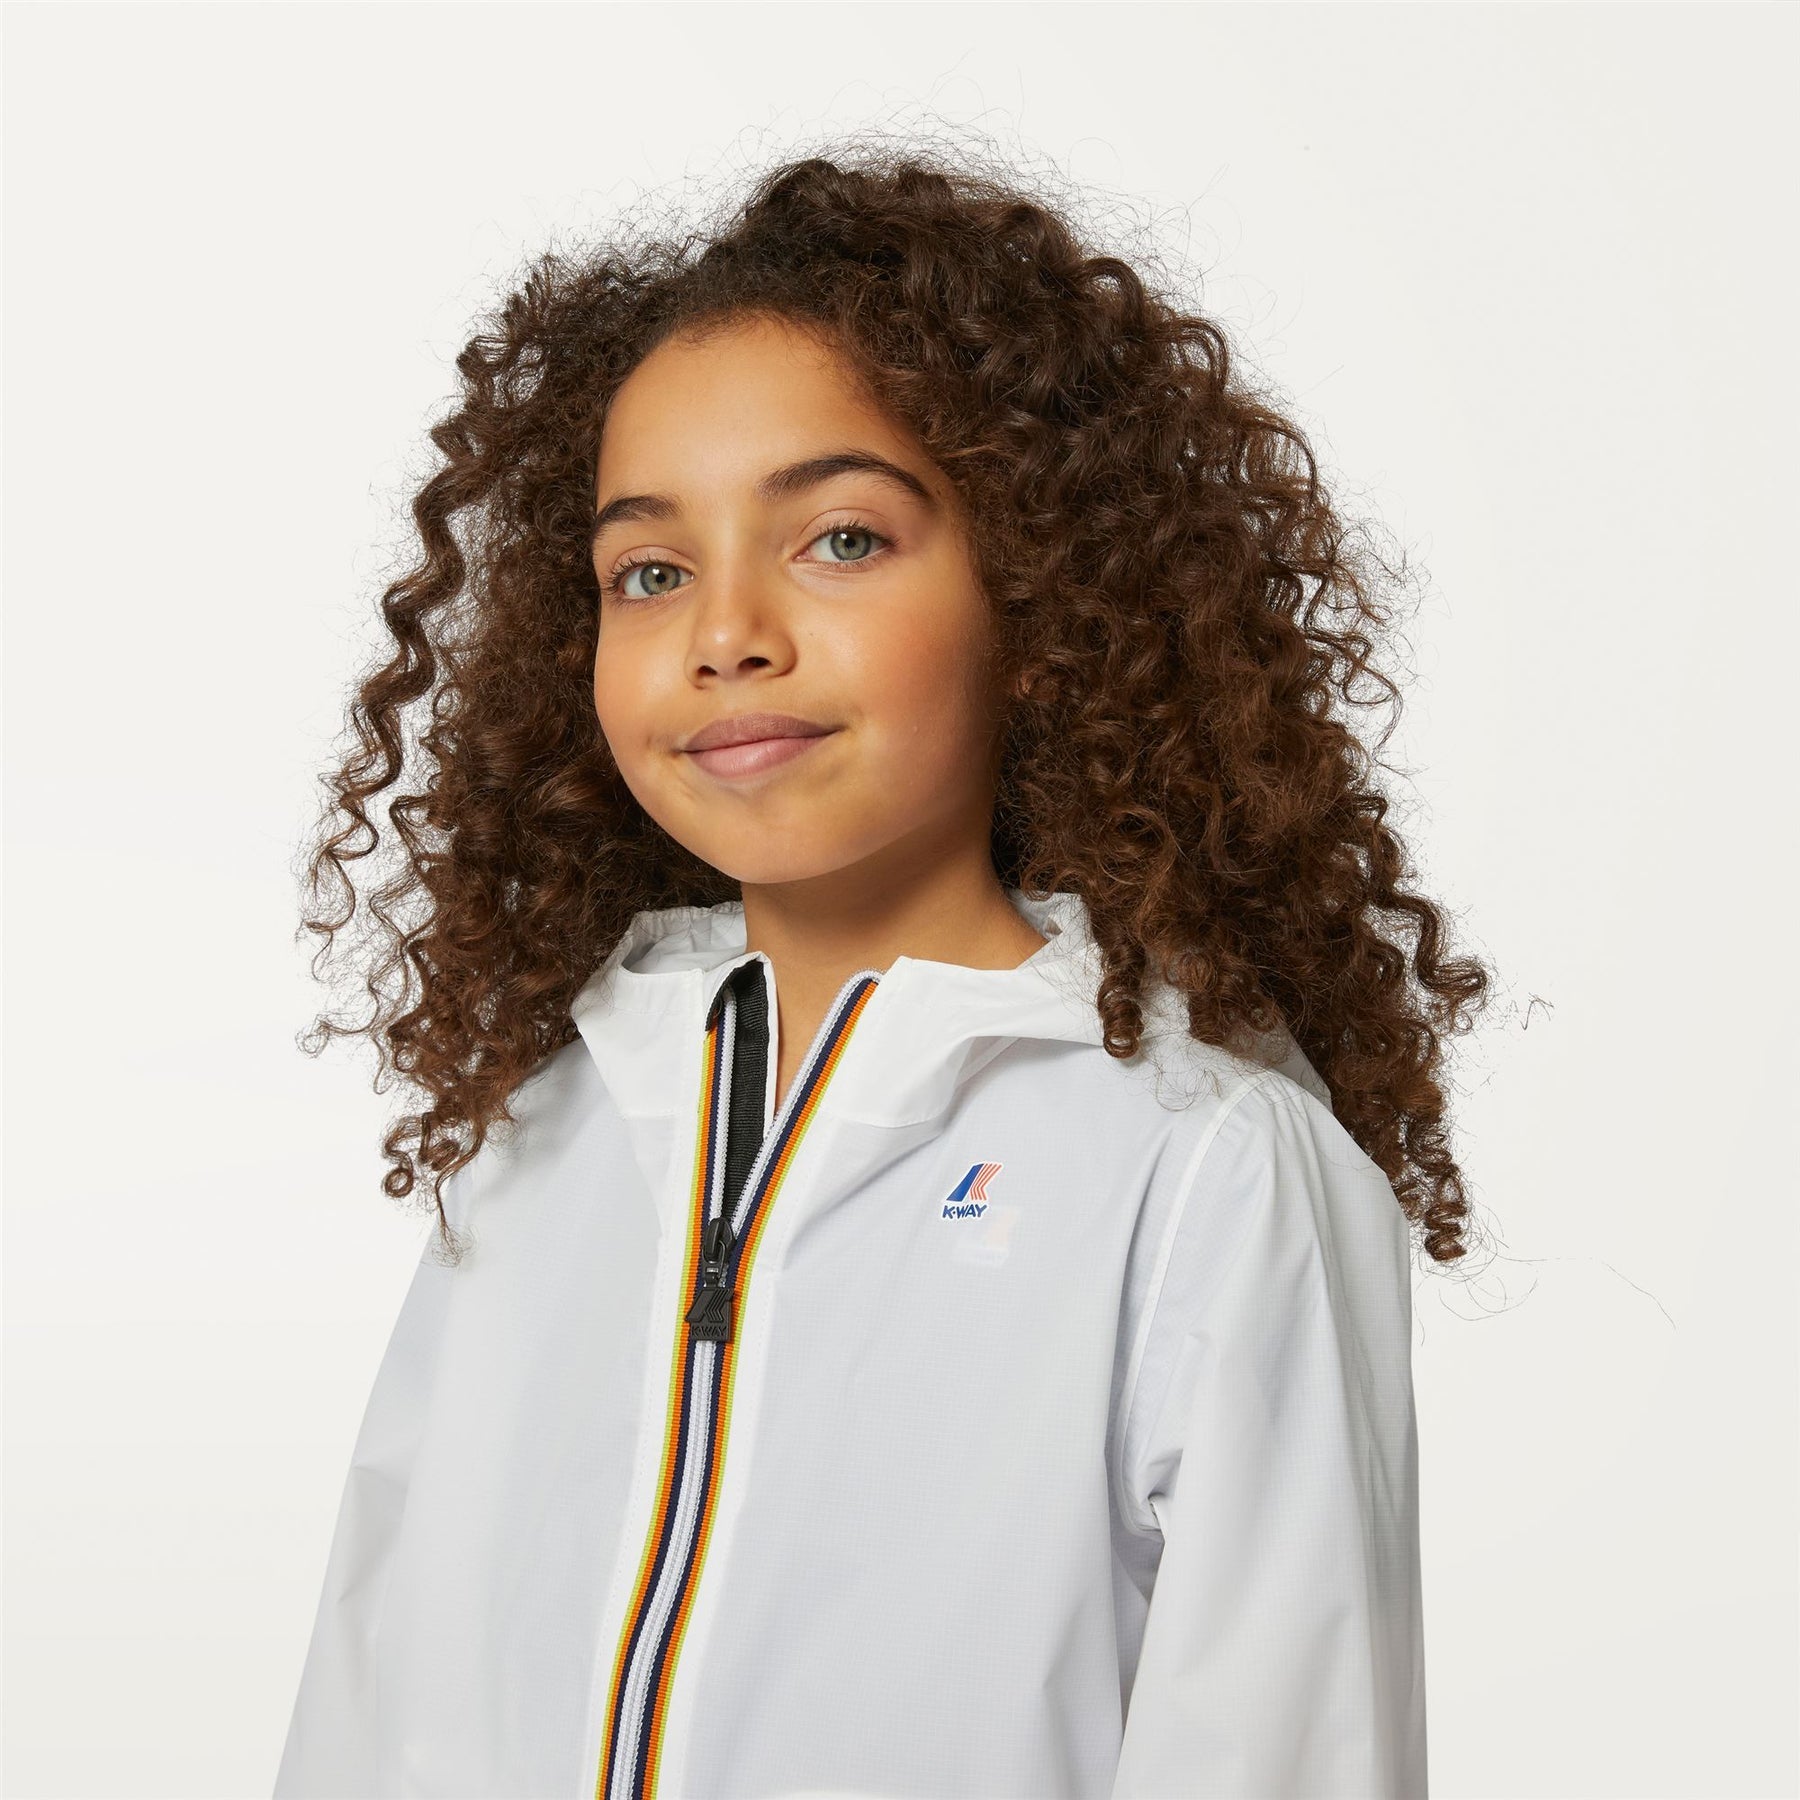 Claude - Kids Packable Full Zip Rain Jacket in White